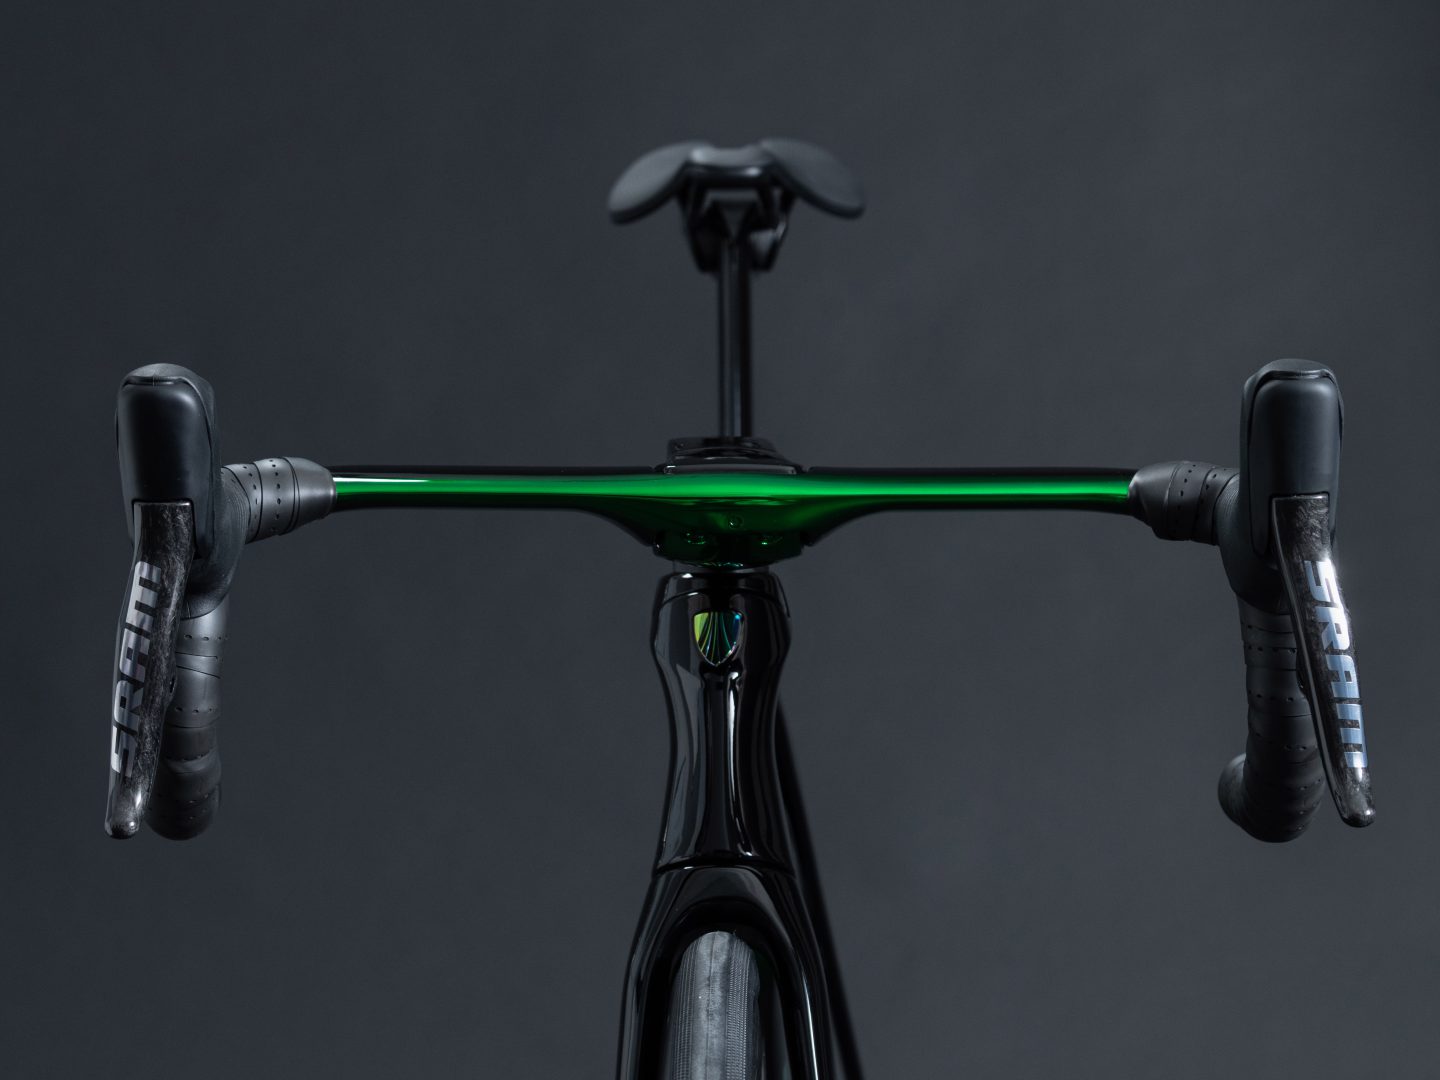 Green chroma handlebars match the color of the bike.